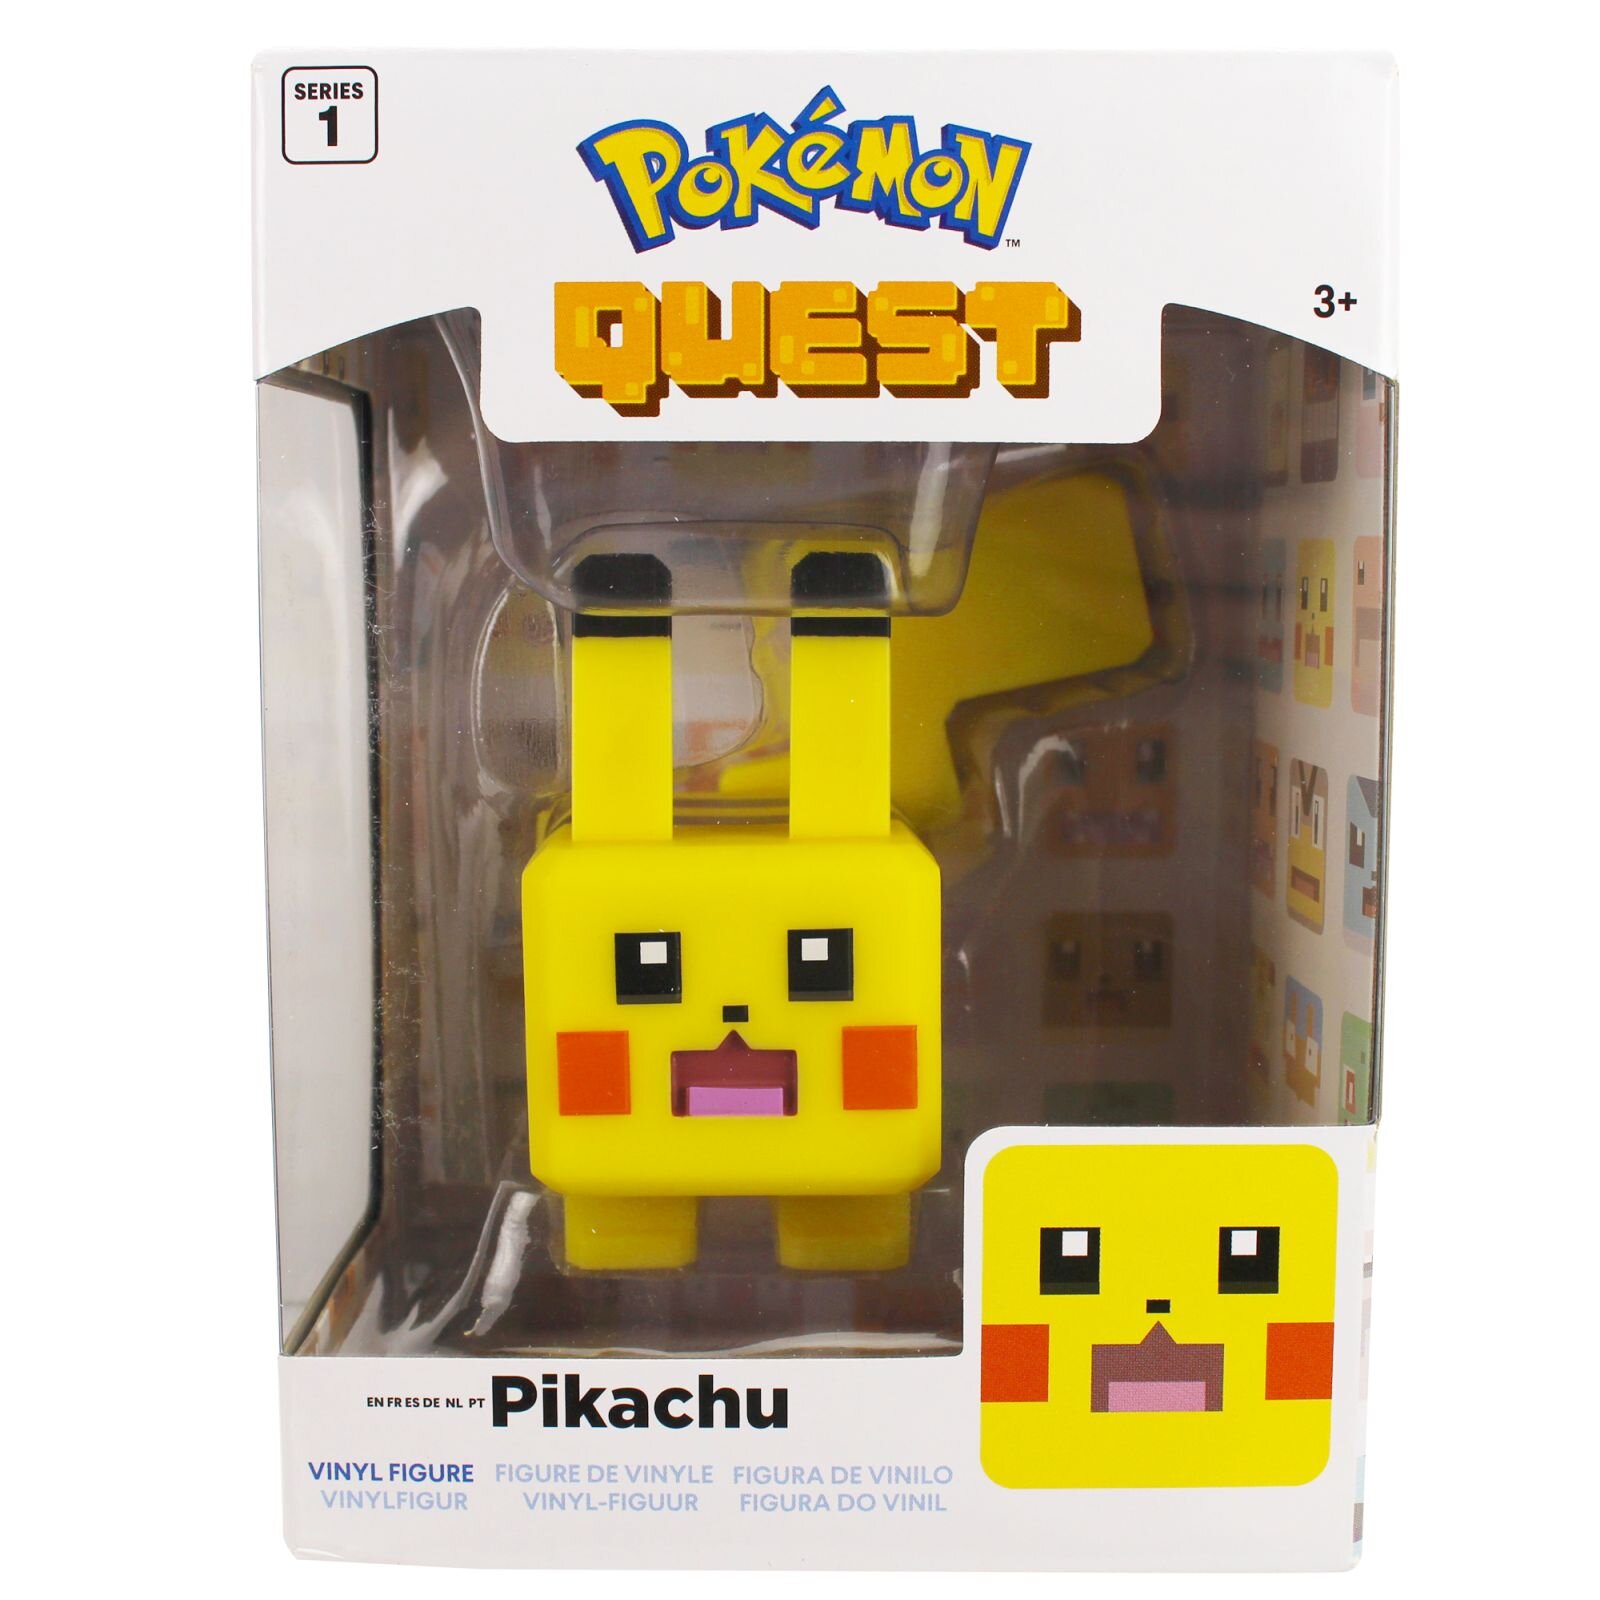 Pokemon Limited Edition 4 Quest Vinyl Figure - Eevee